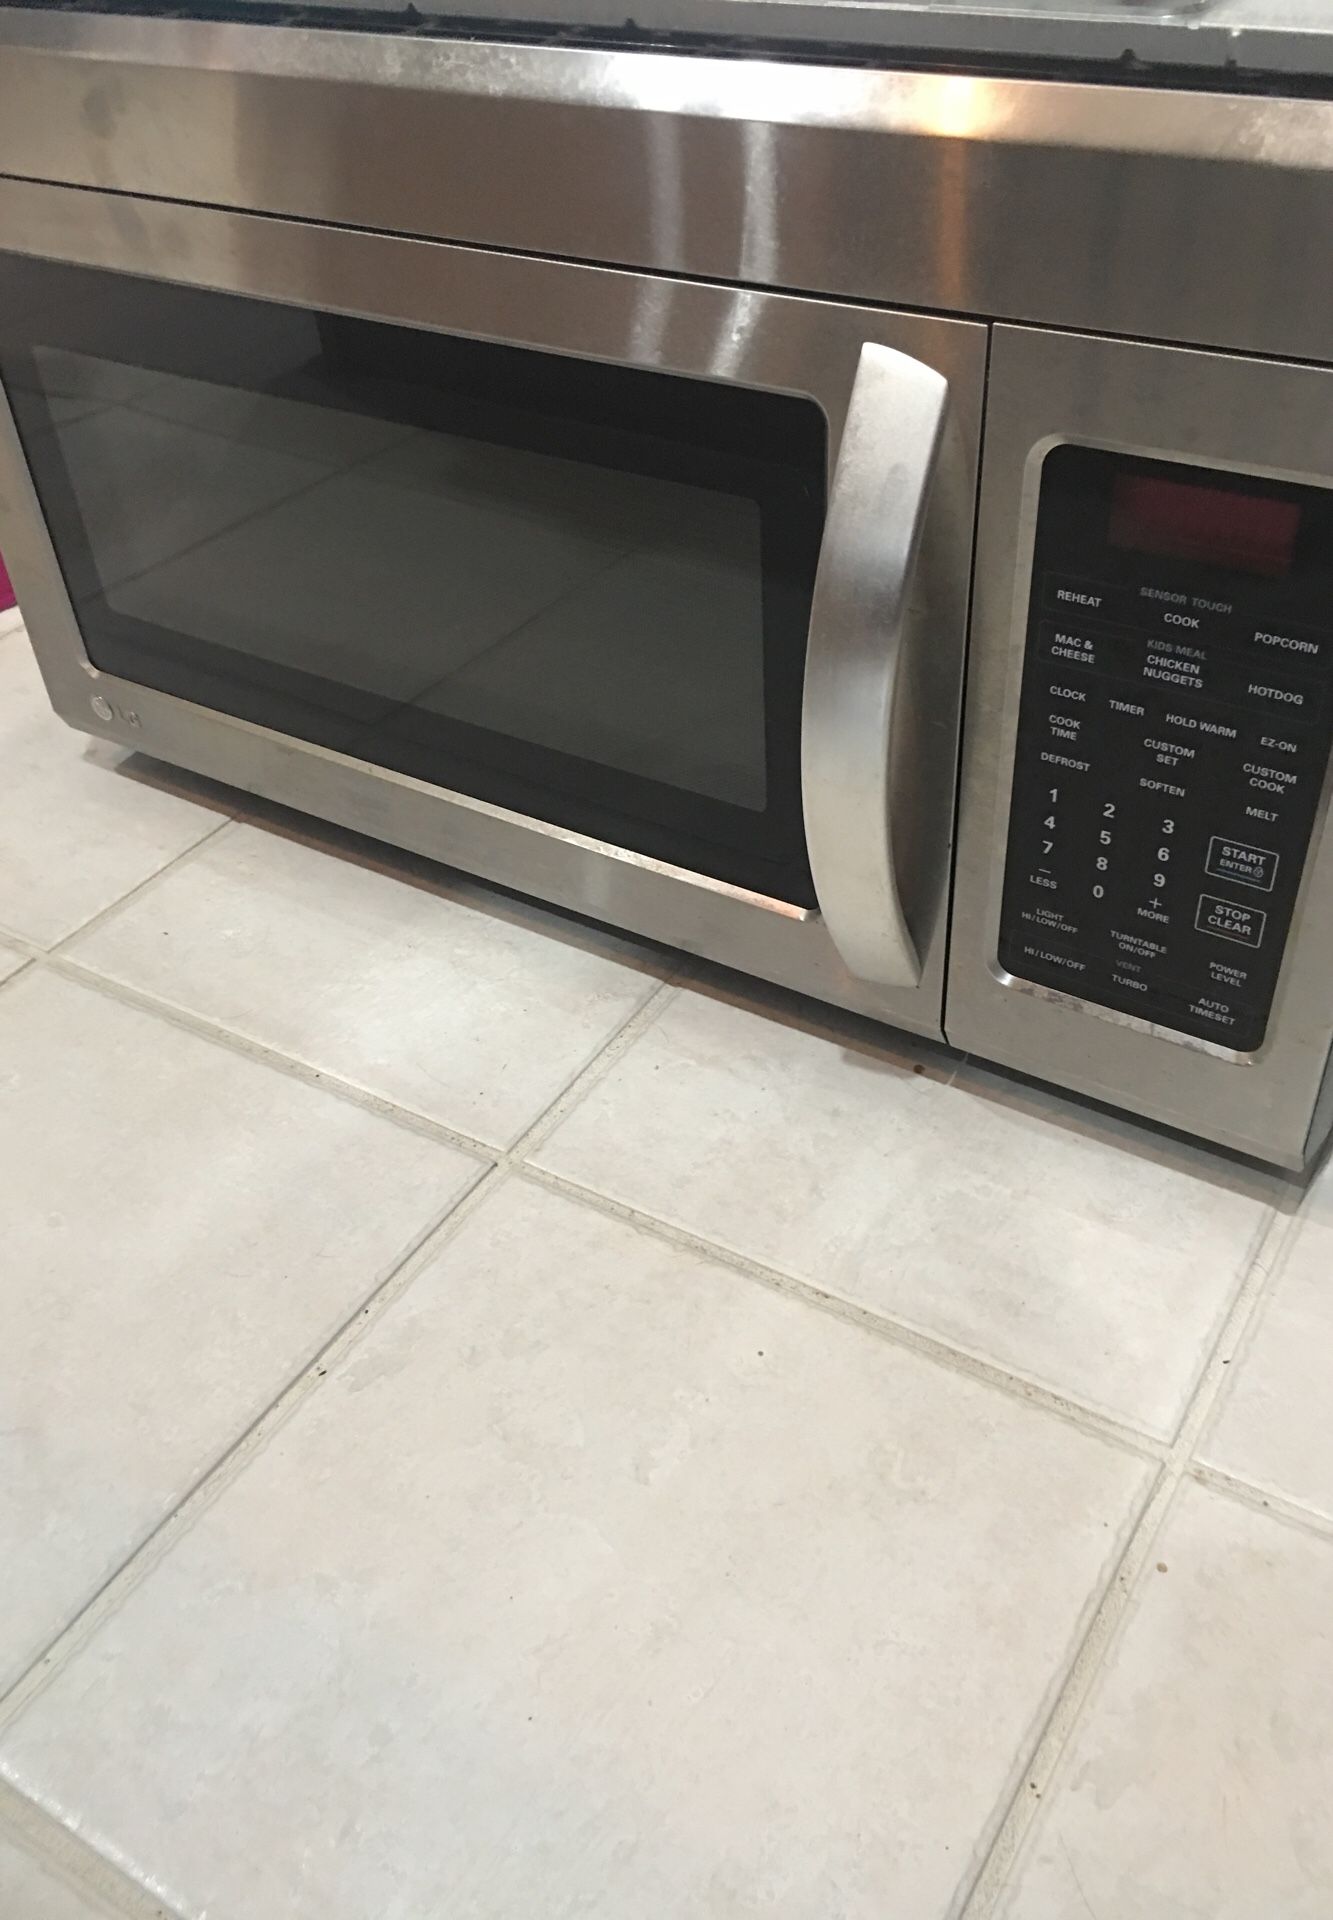 Free LG Microwave Range Oven kitchen Appliance - needs repair